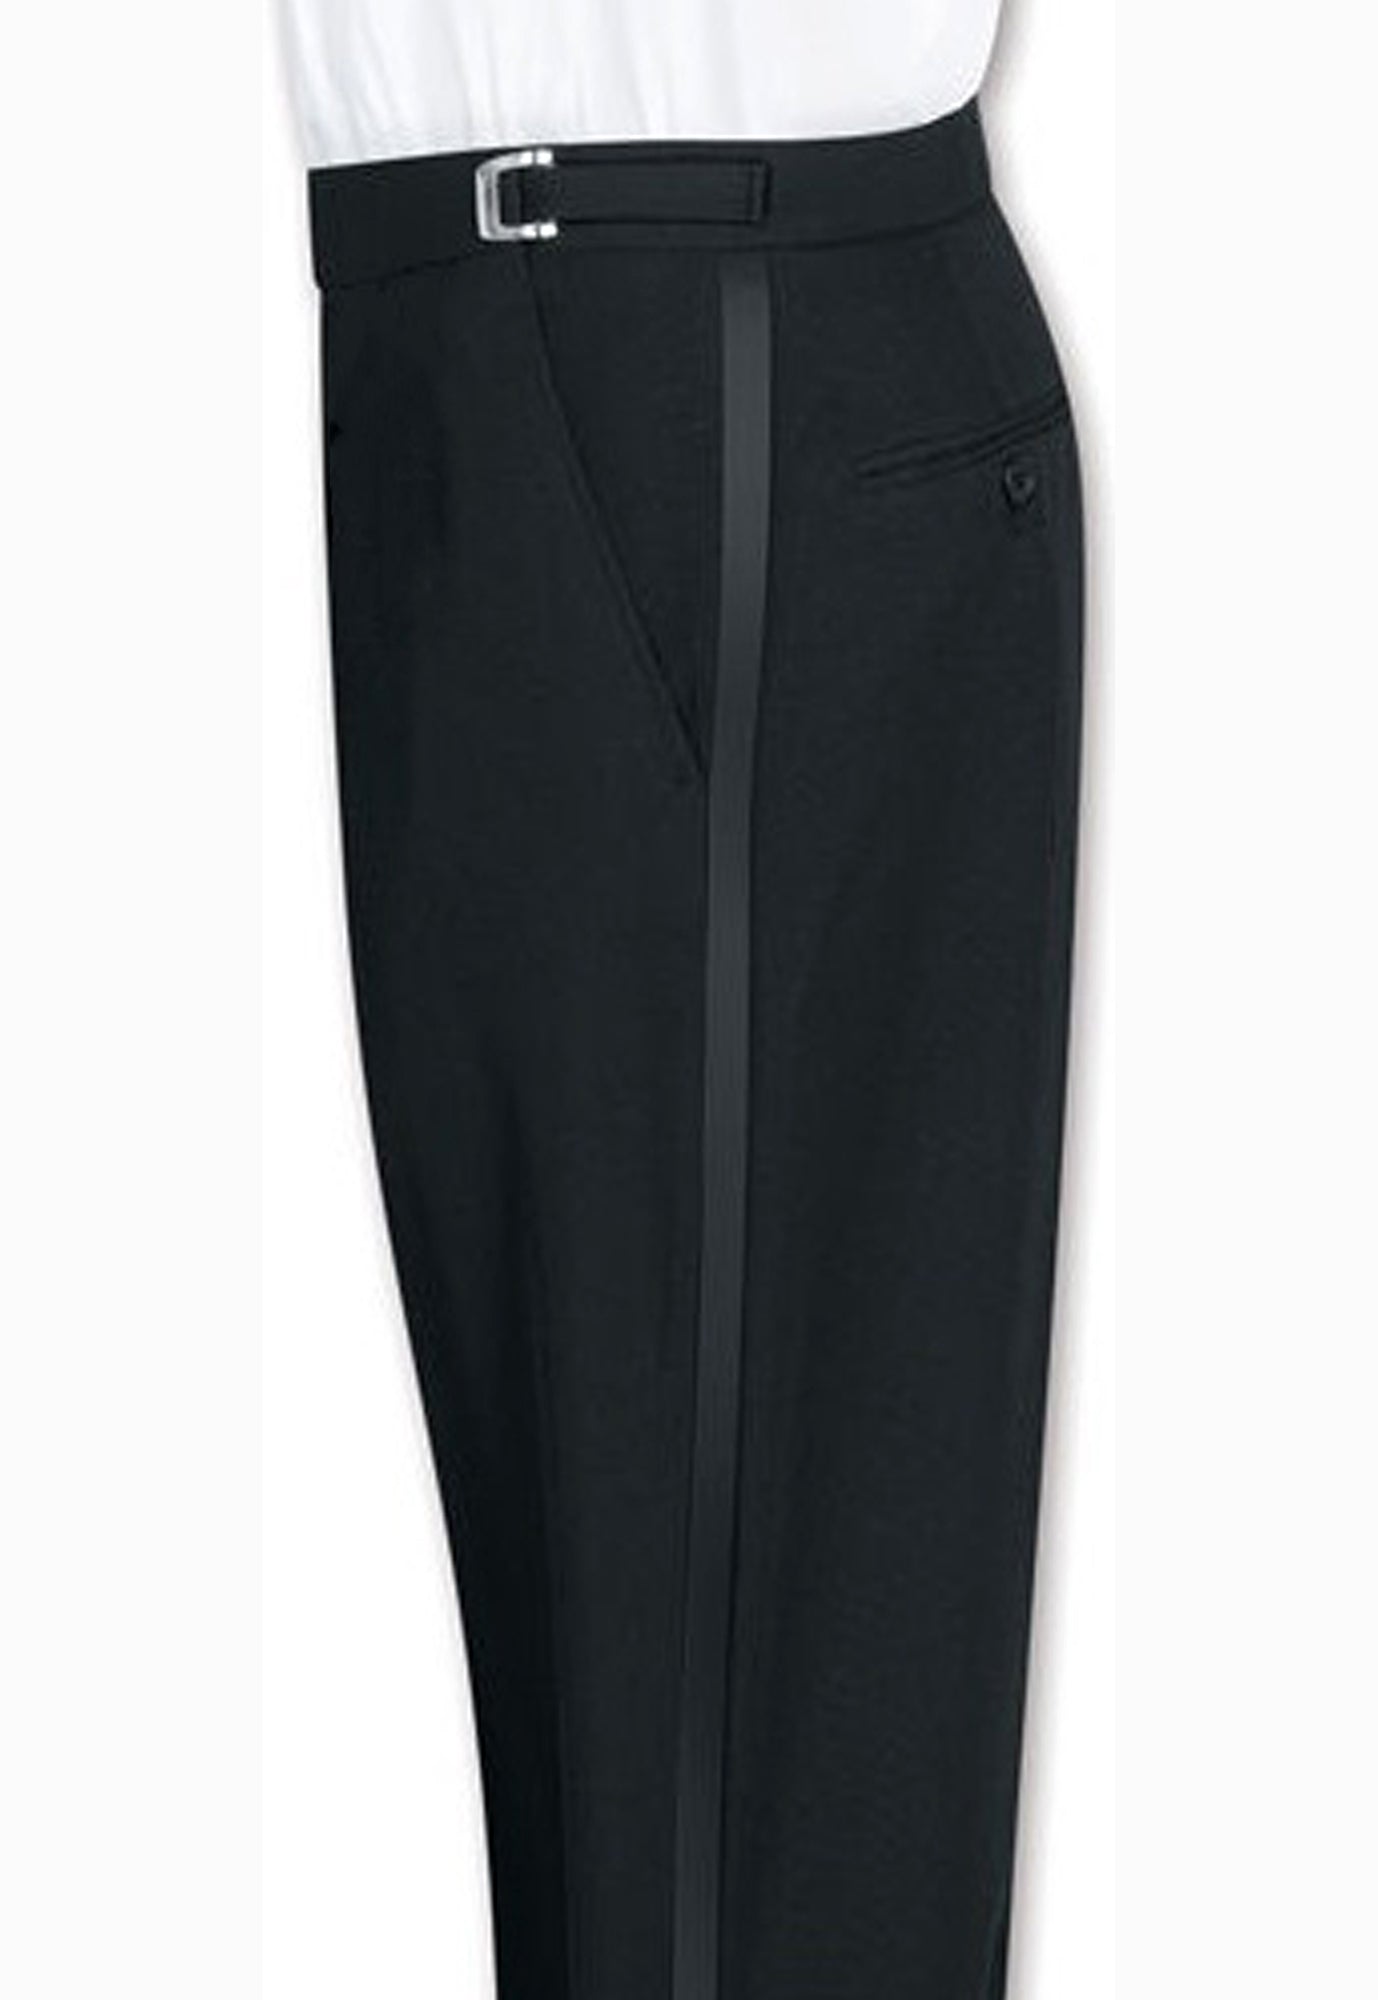 mens tuxedo trousers with satin stripe